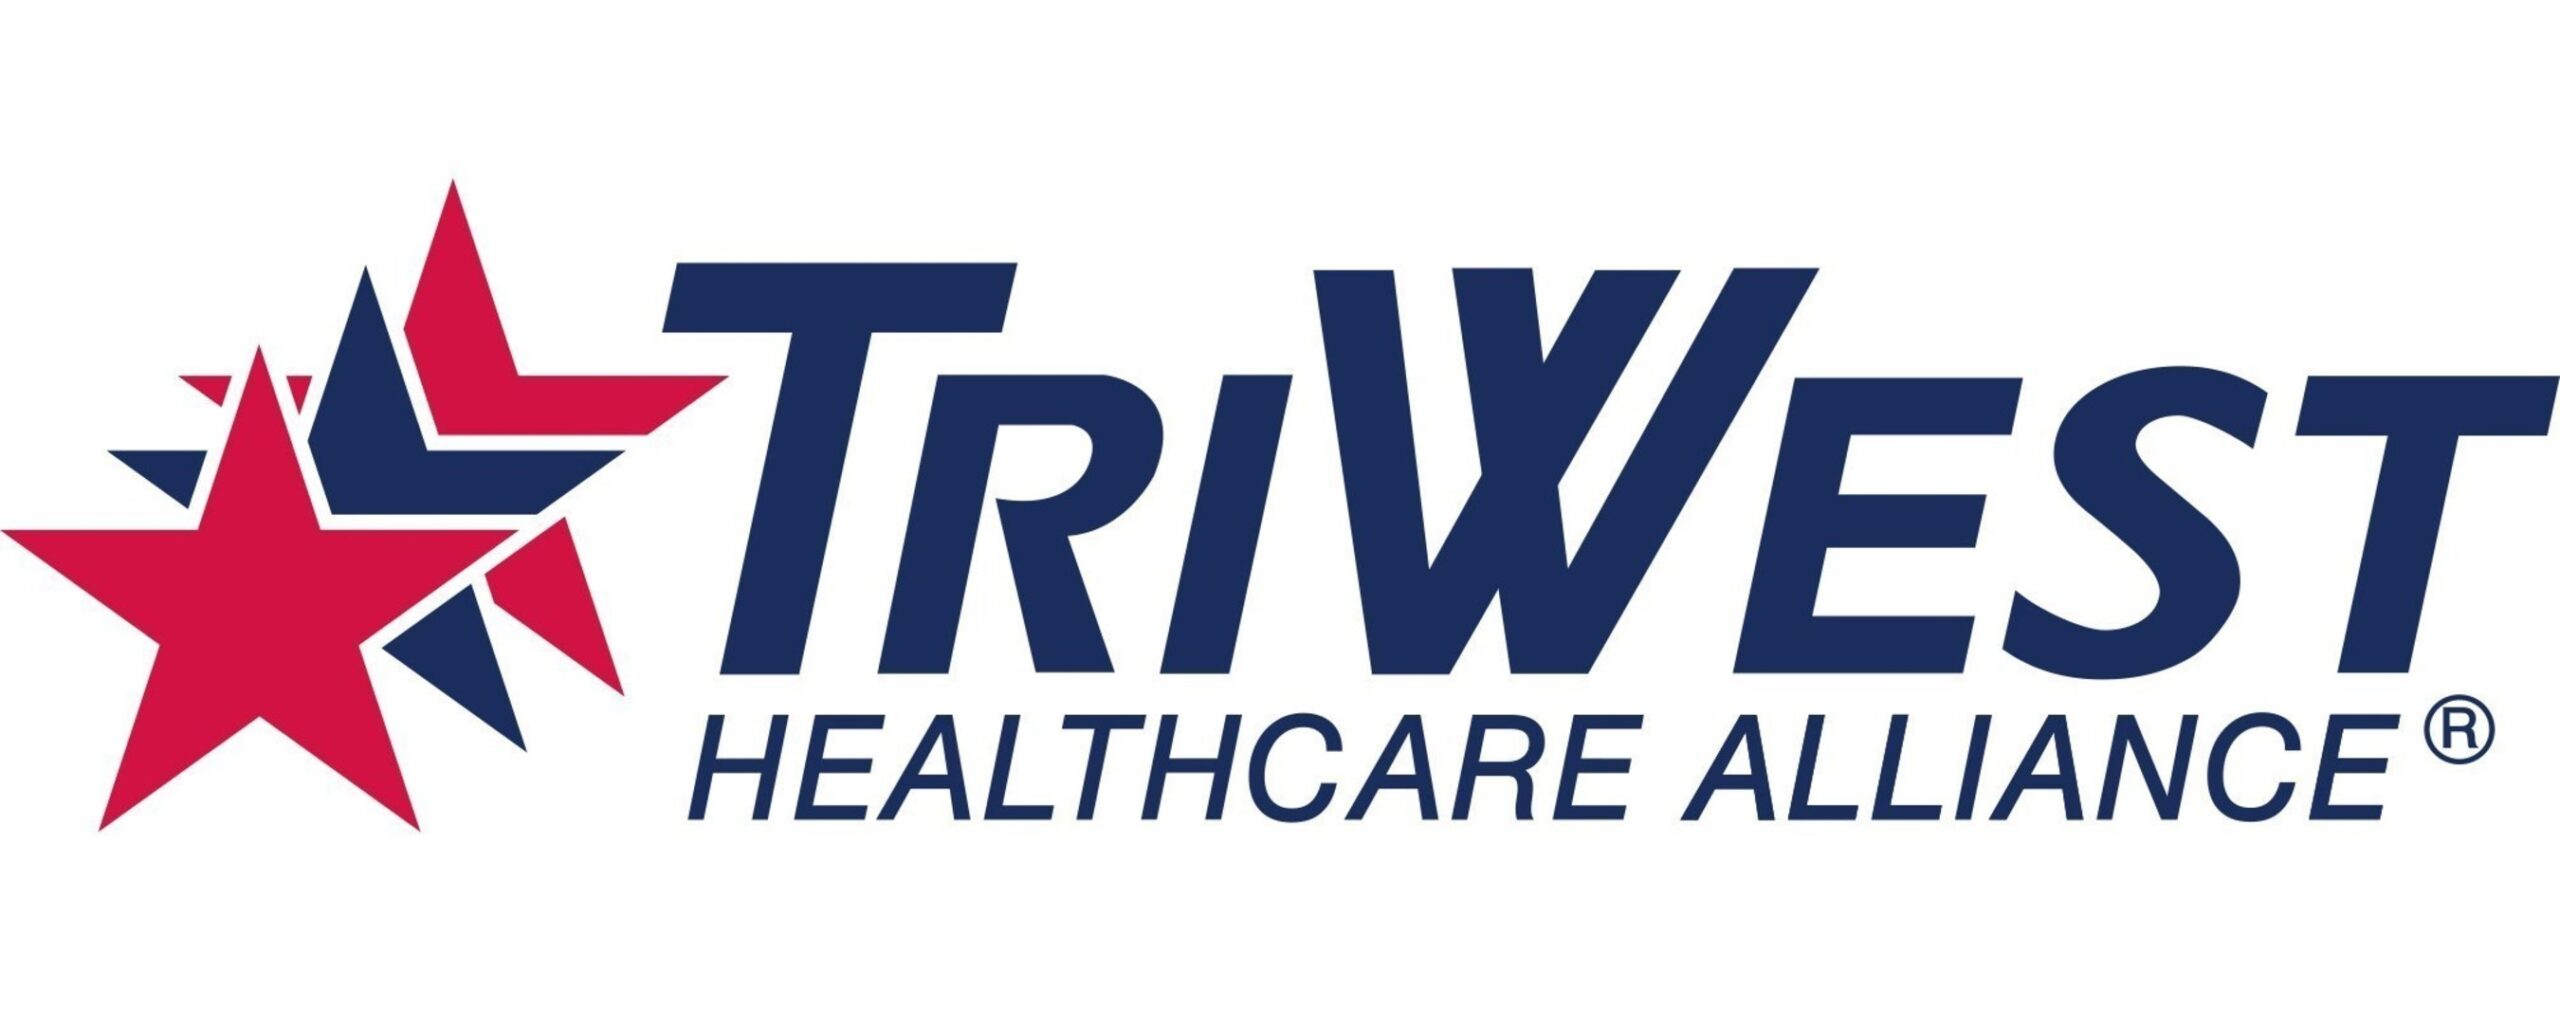 TriWest Healthcare Alliance (PRNewsFoto/TriWest Healthcare Alliance)